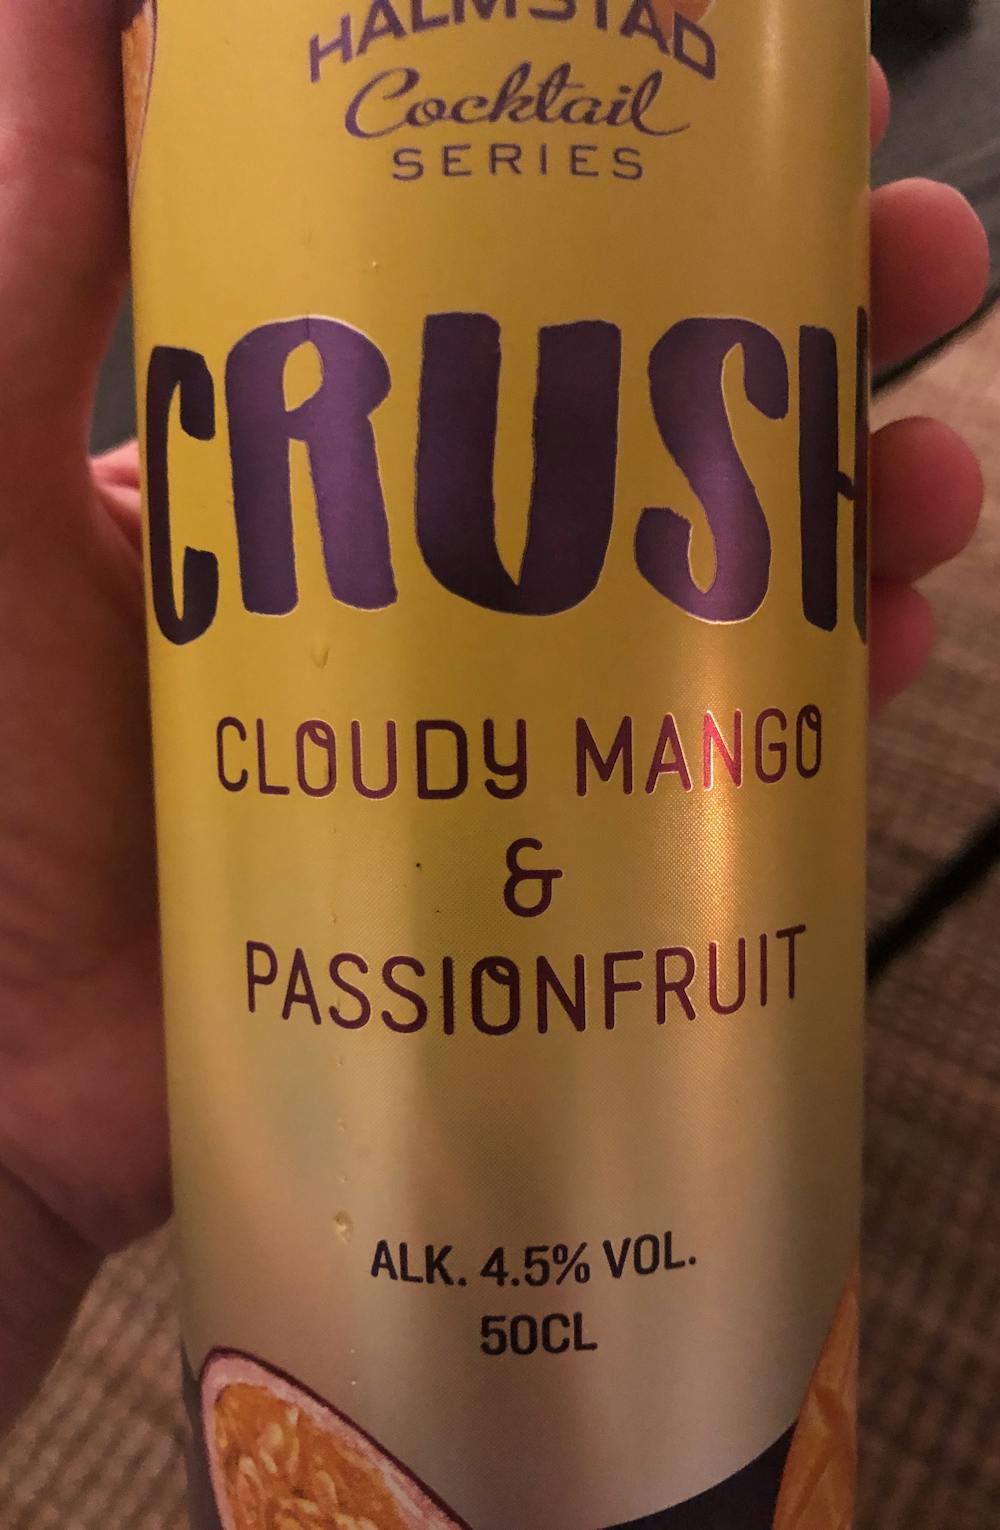 Crush cloudy mango & passionfruit, Halmstad